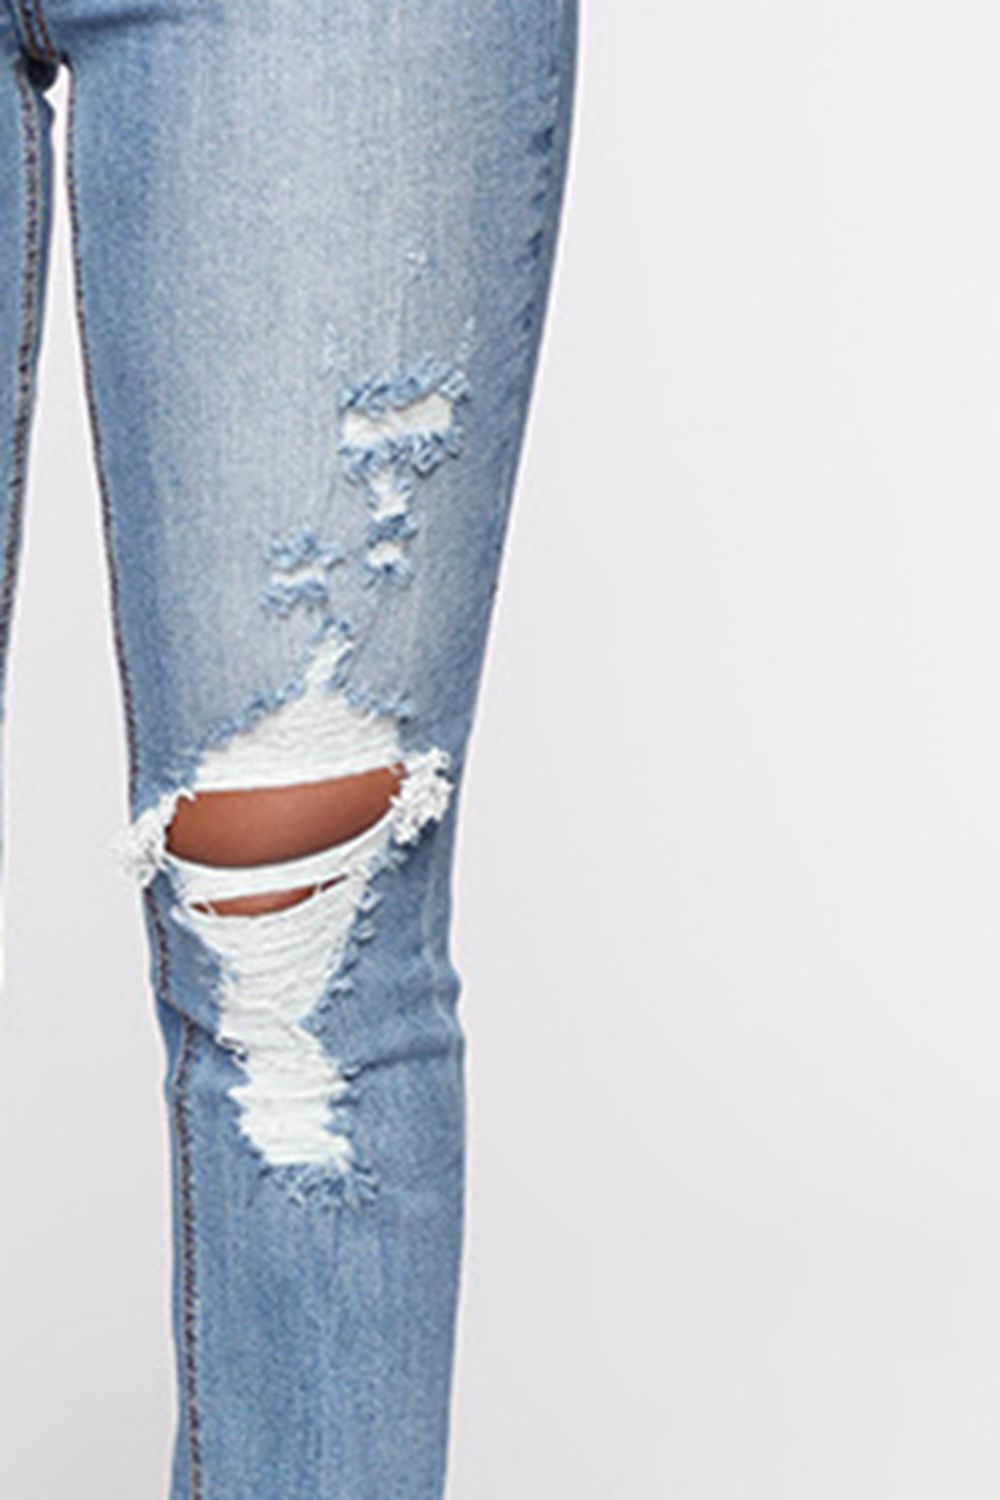 Distressed Slit Jeans - ONLINE EXCLUSIVE